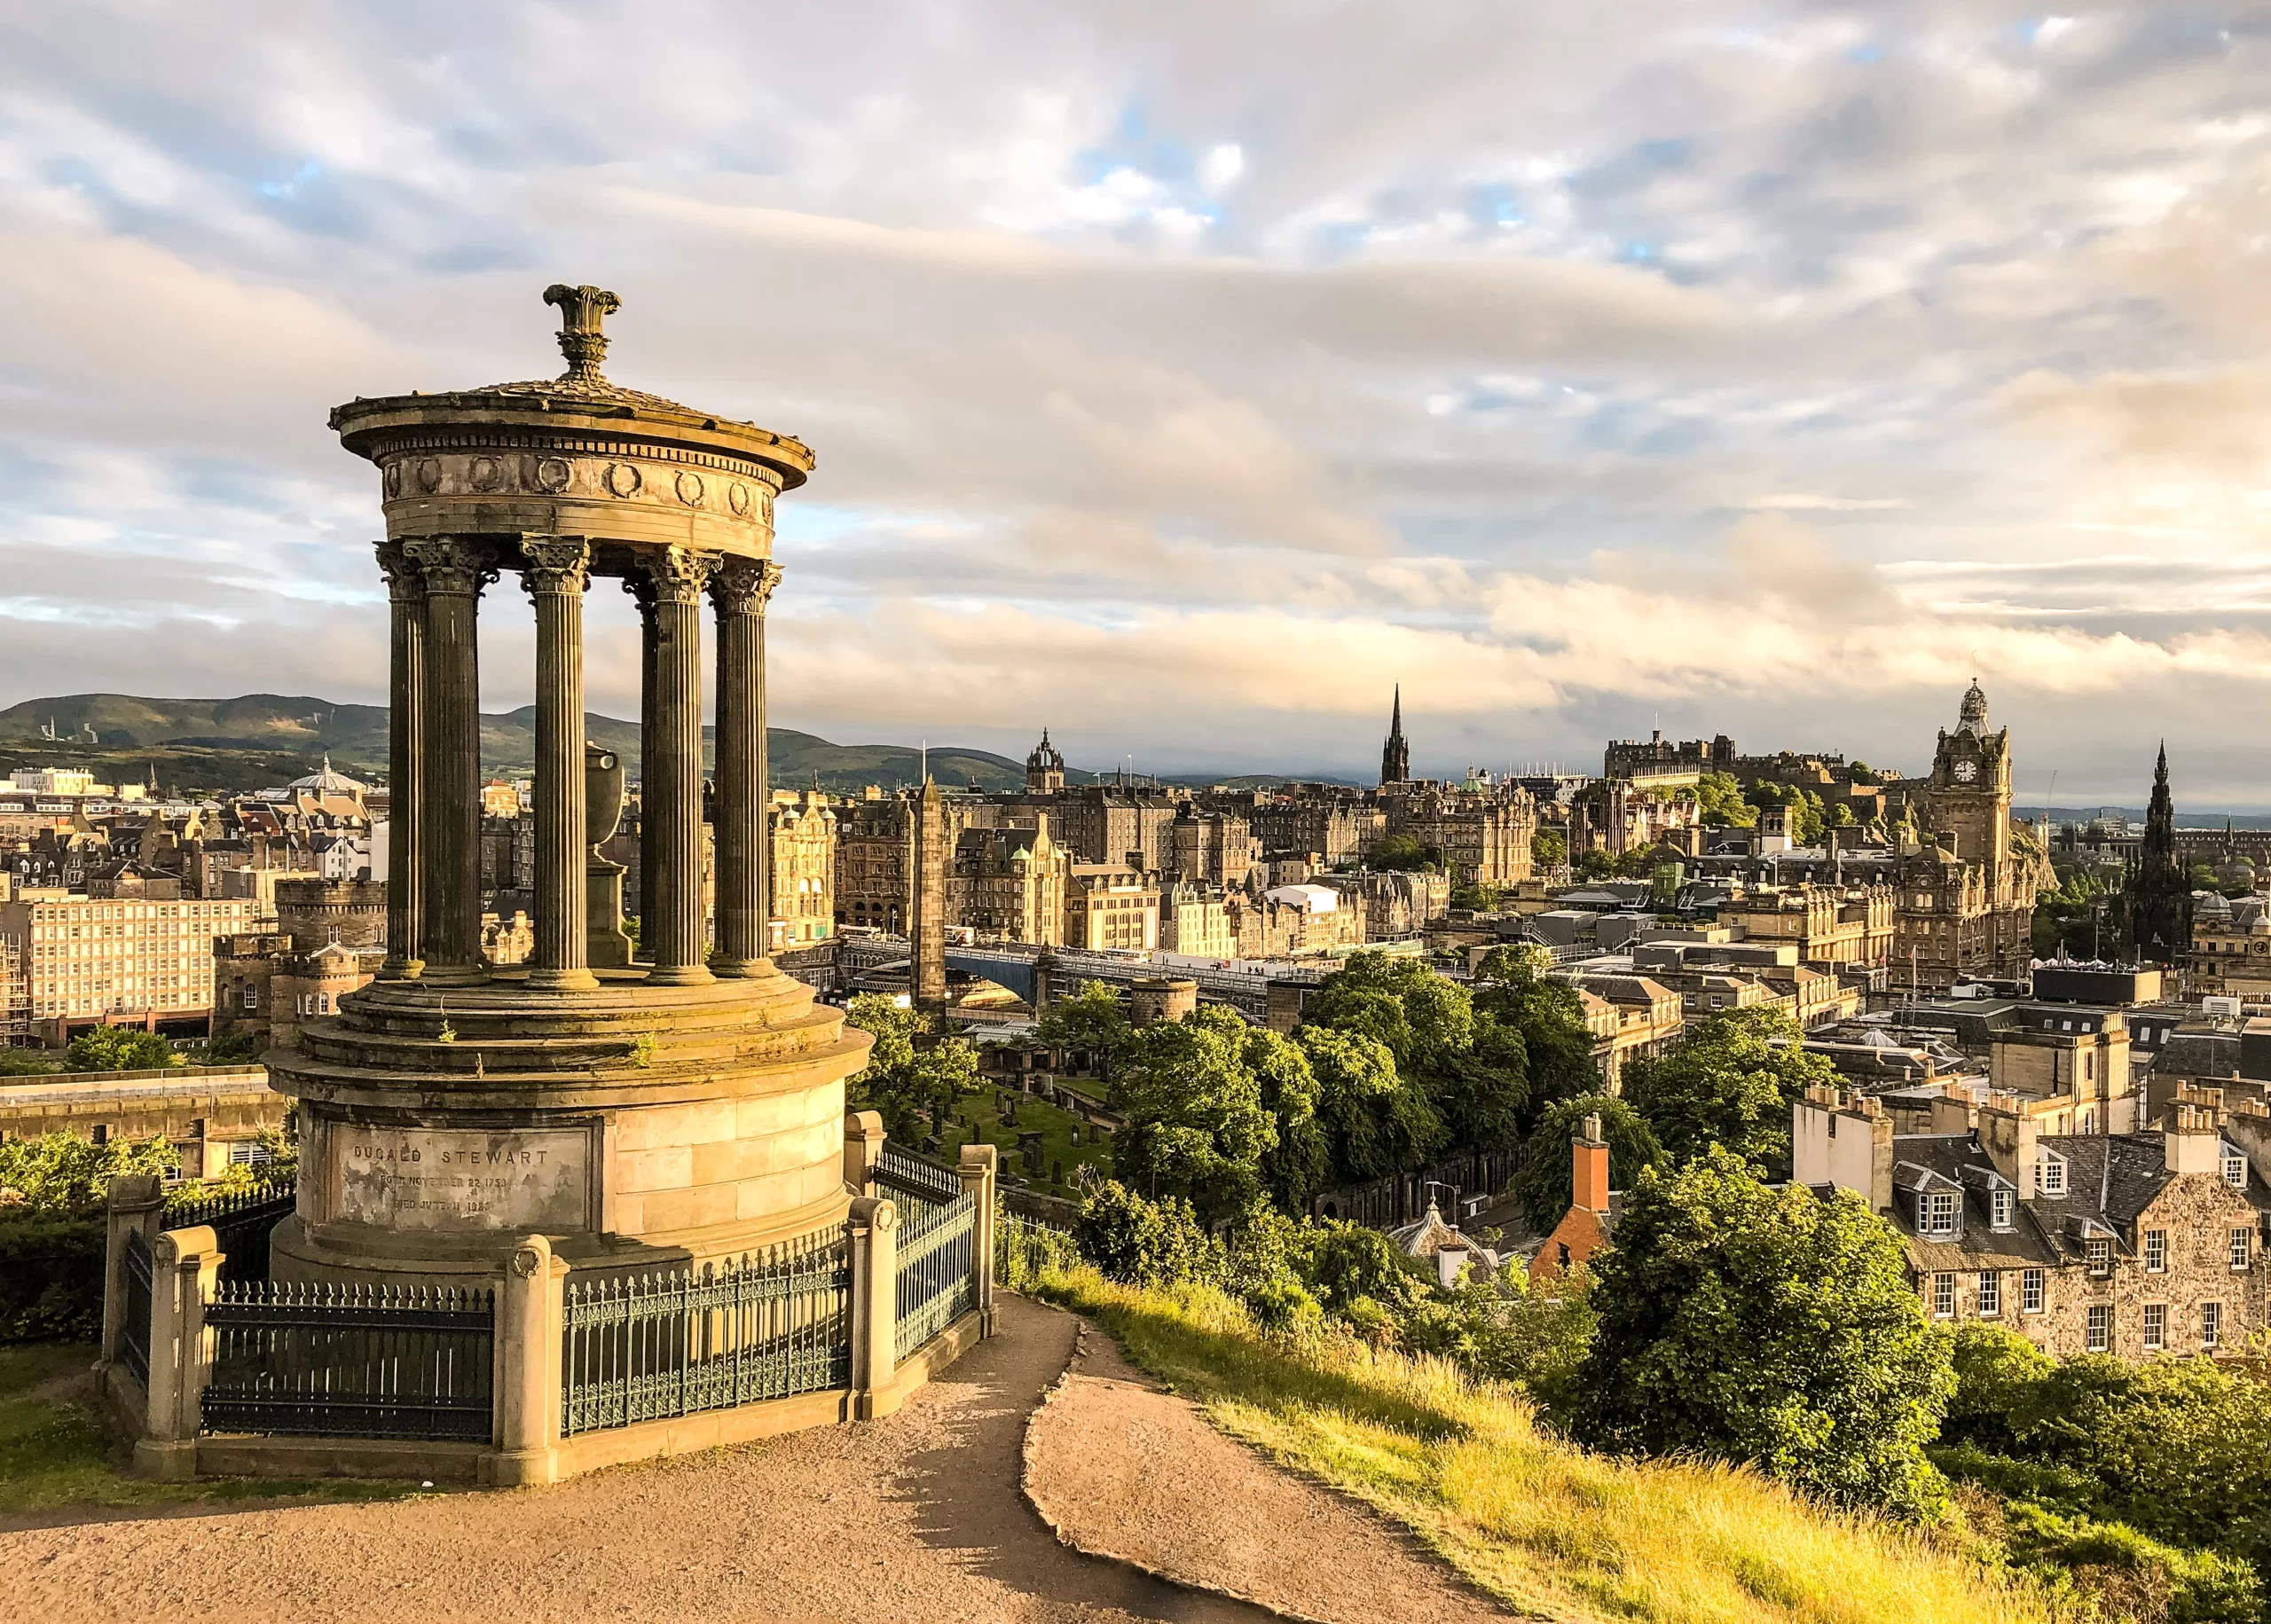 Edinburgh, UK Published on September 6, 2019 Free to use under the Unsplash License Early sunset over Calton Hill in Edinburgh, Scotland. Summer 2019